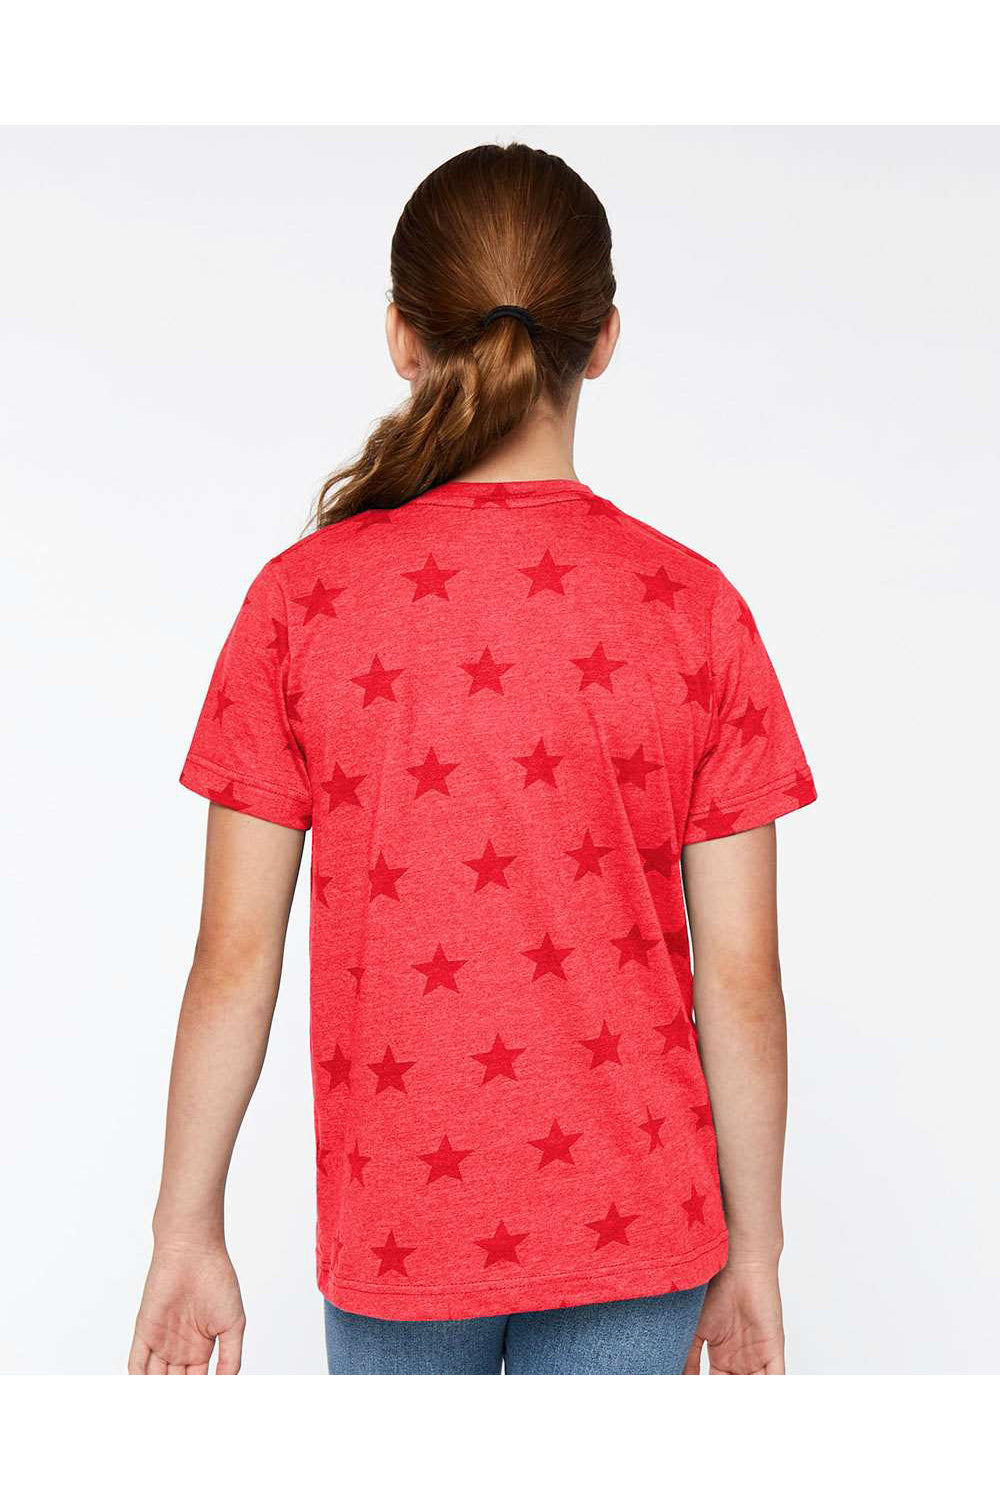 Code Five 2229 Youth Star Print Short Sleeve Crewneck T-Shirt Red Model Back